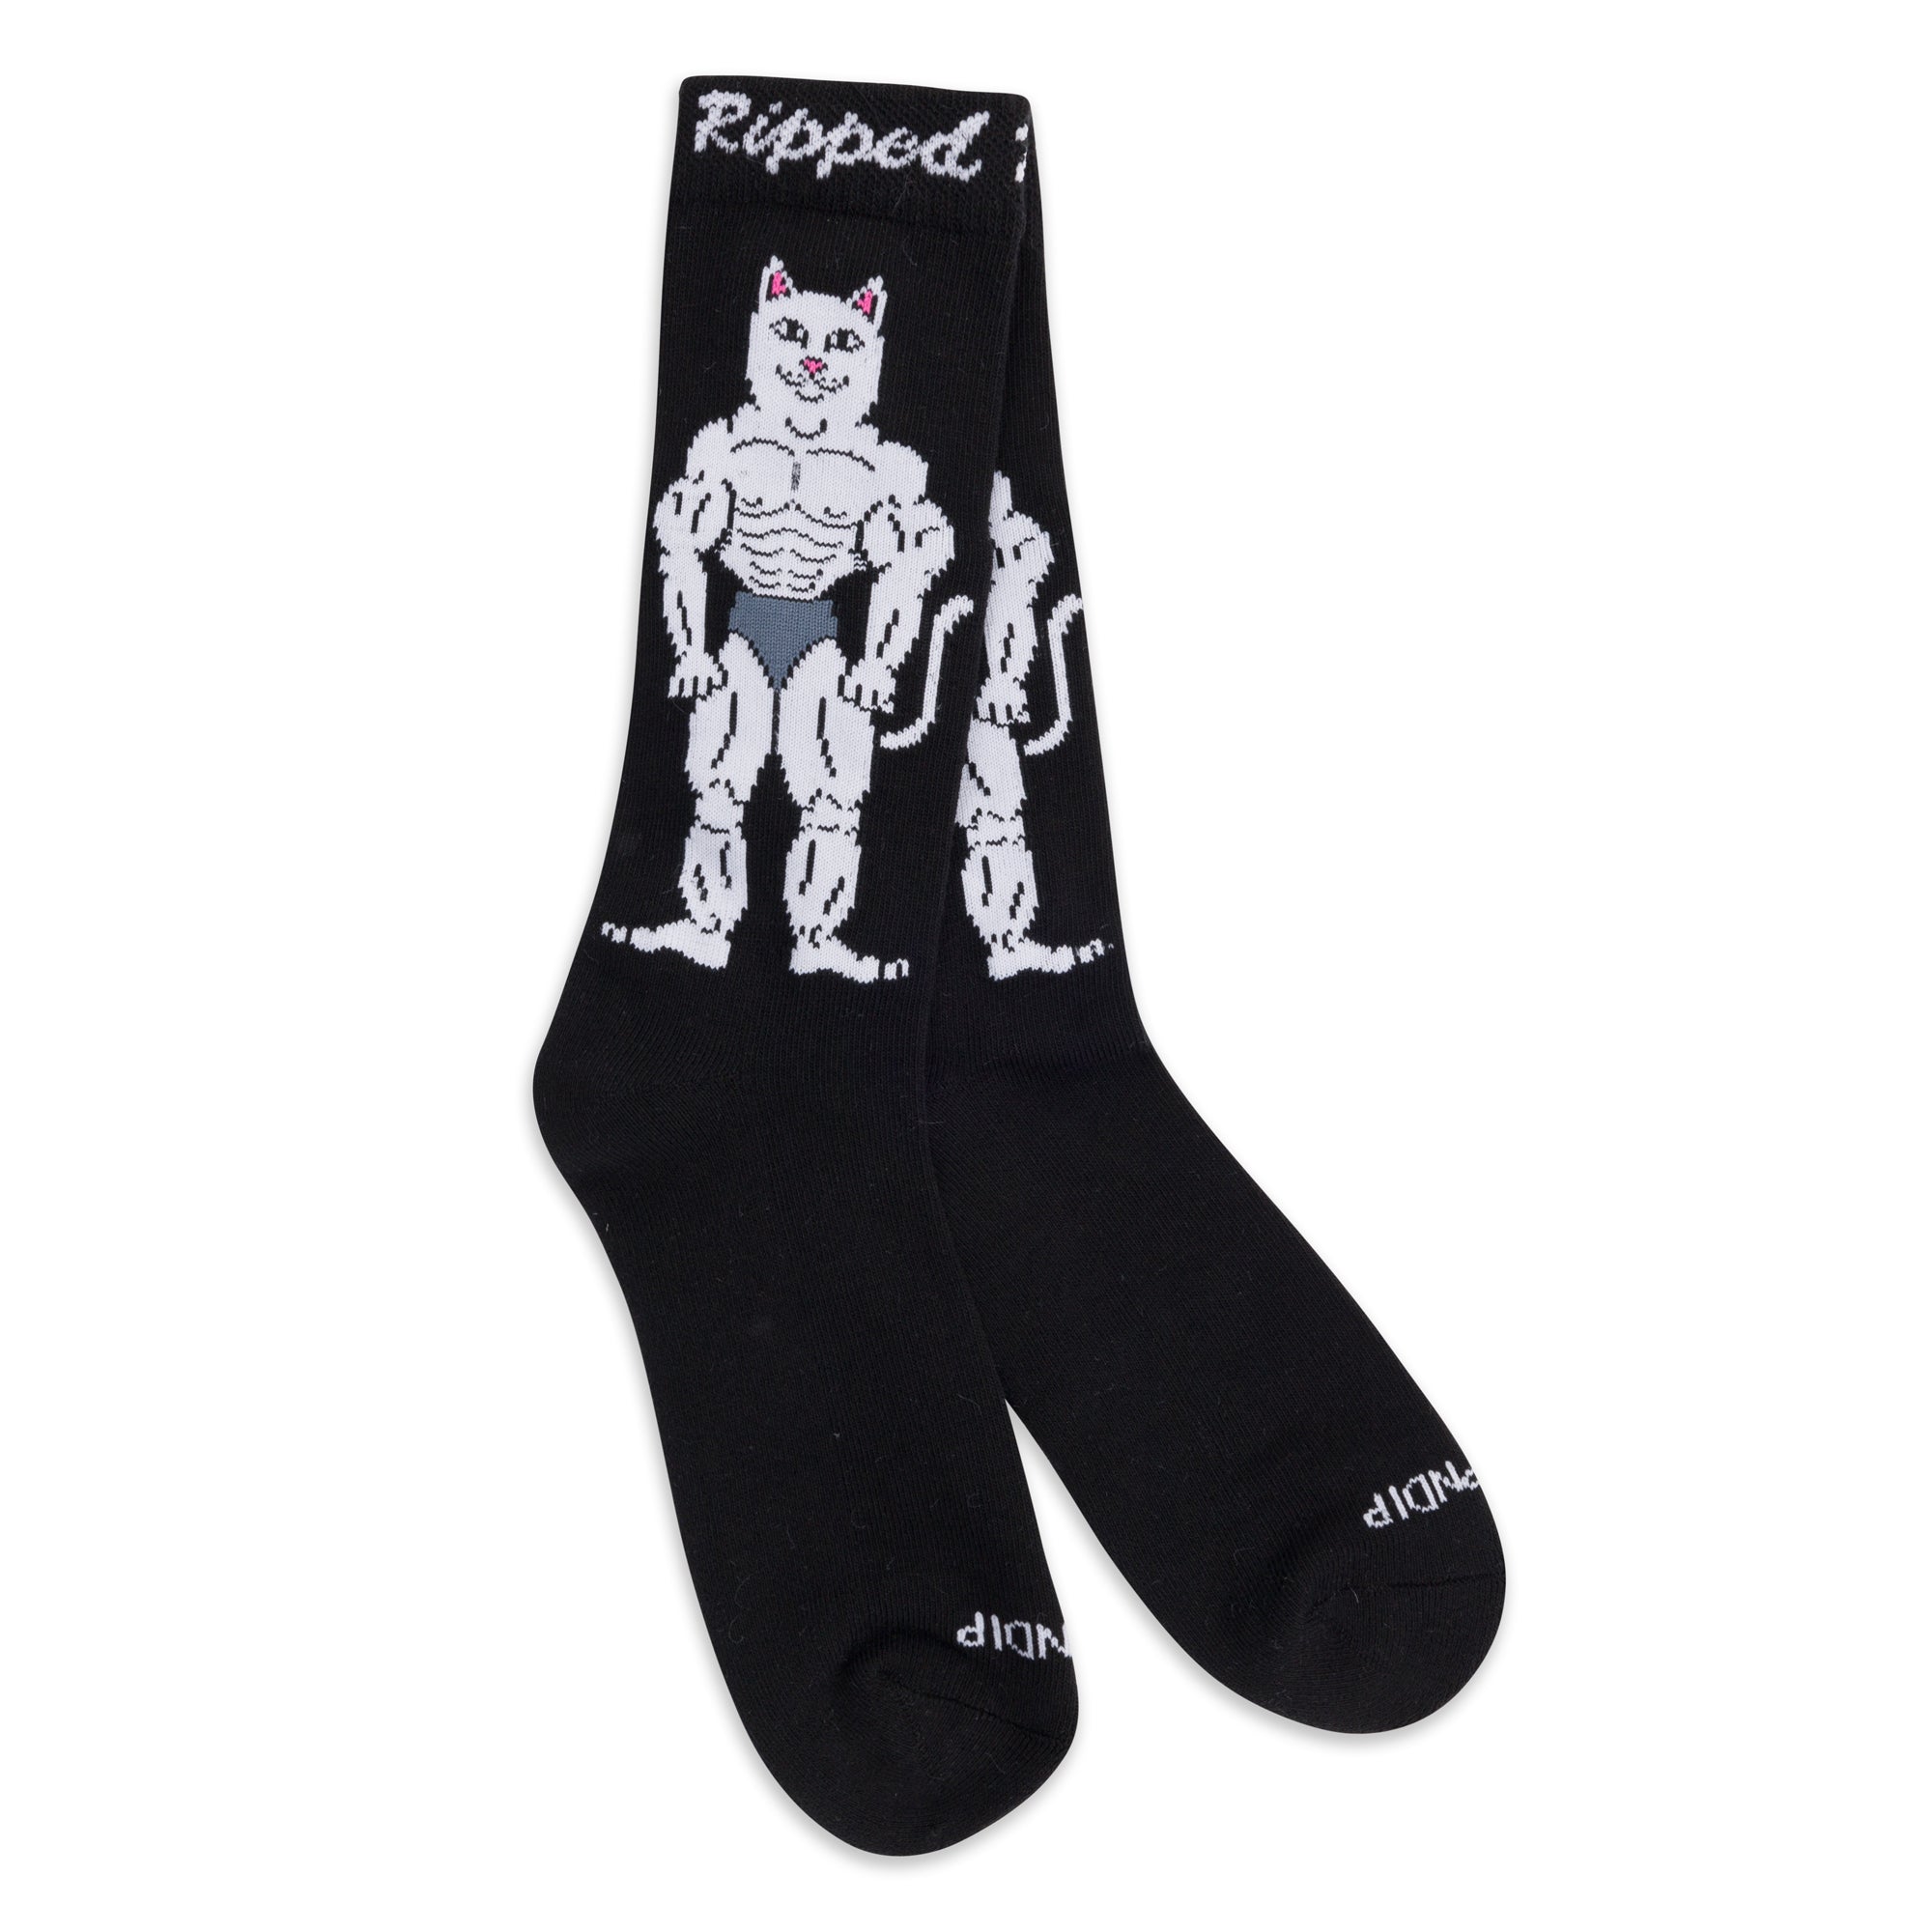 Ripped N Dipped Socks (Black)